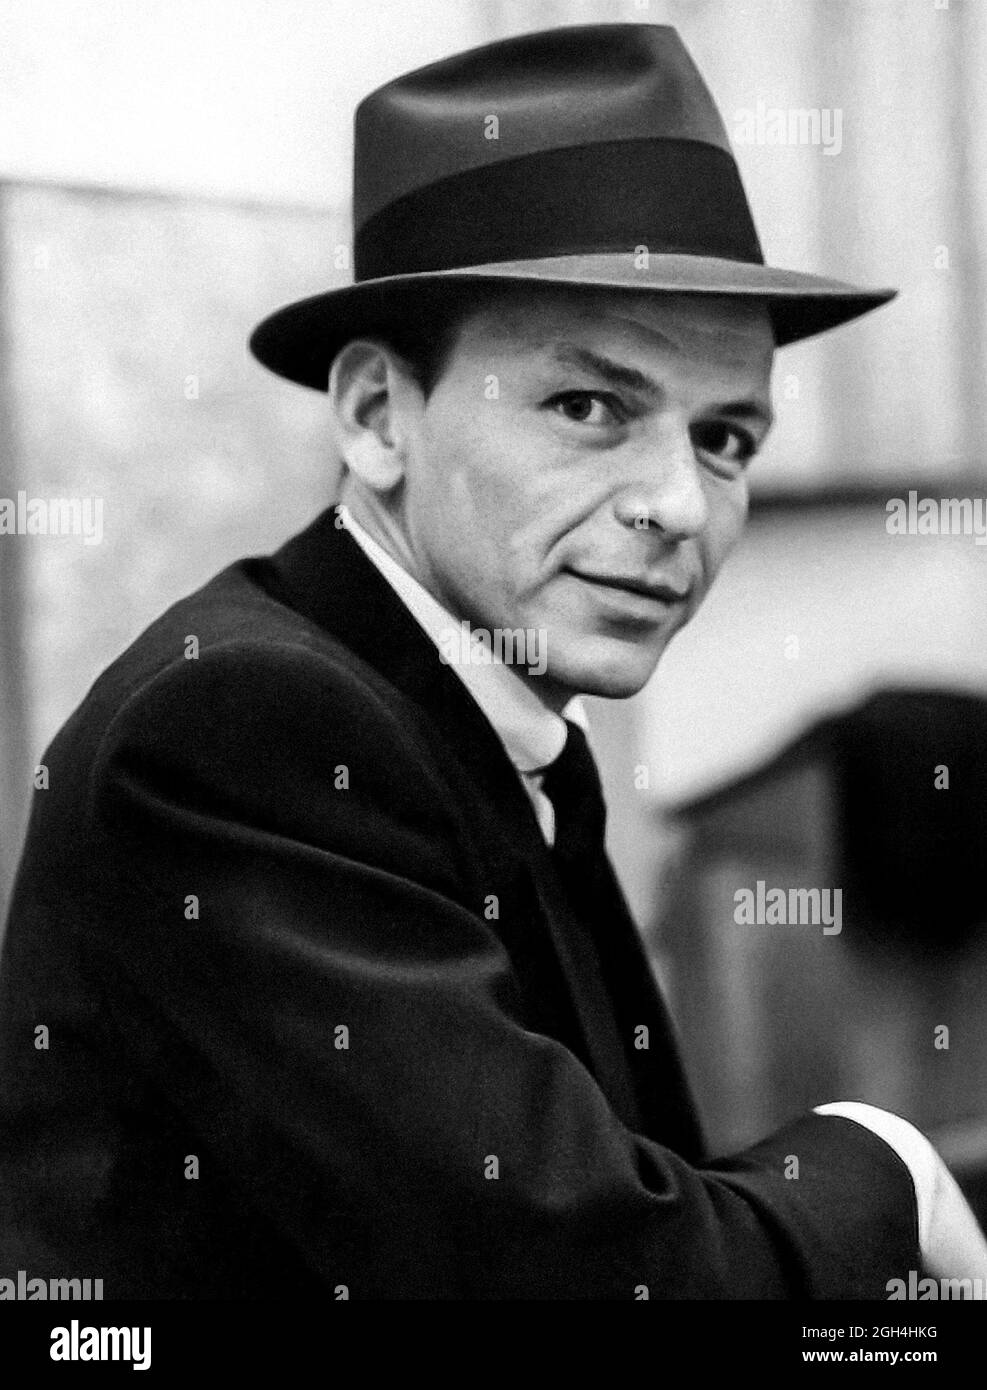 Vintage Photographic Portrait - Frank Sinatra Stock Photo